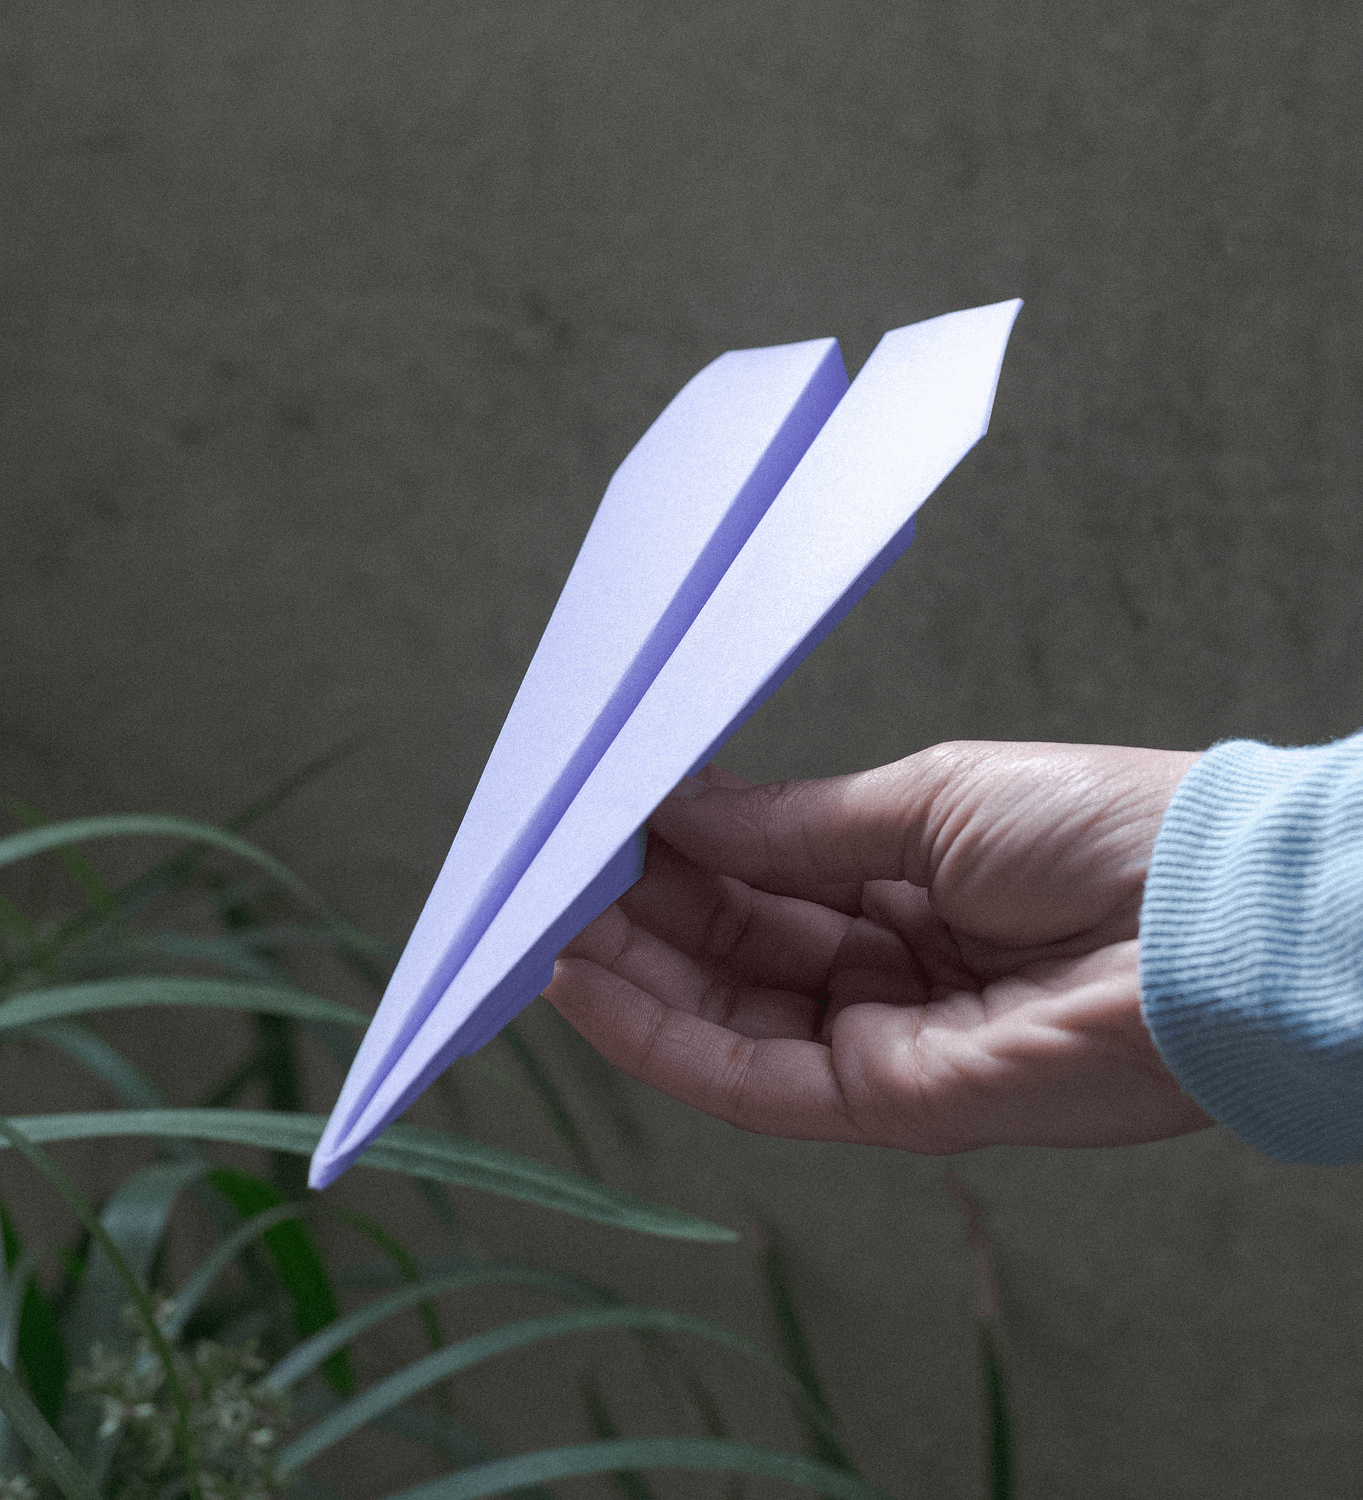 Kagazi: A hand holding a purple colour paper plane